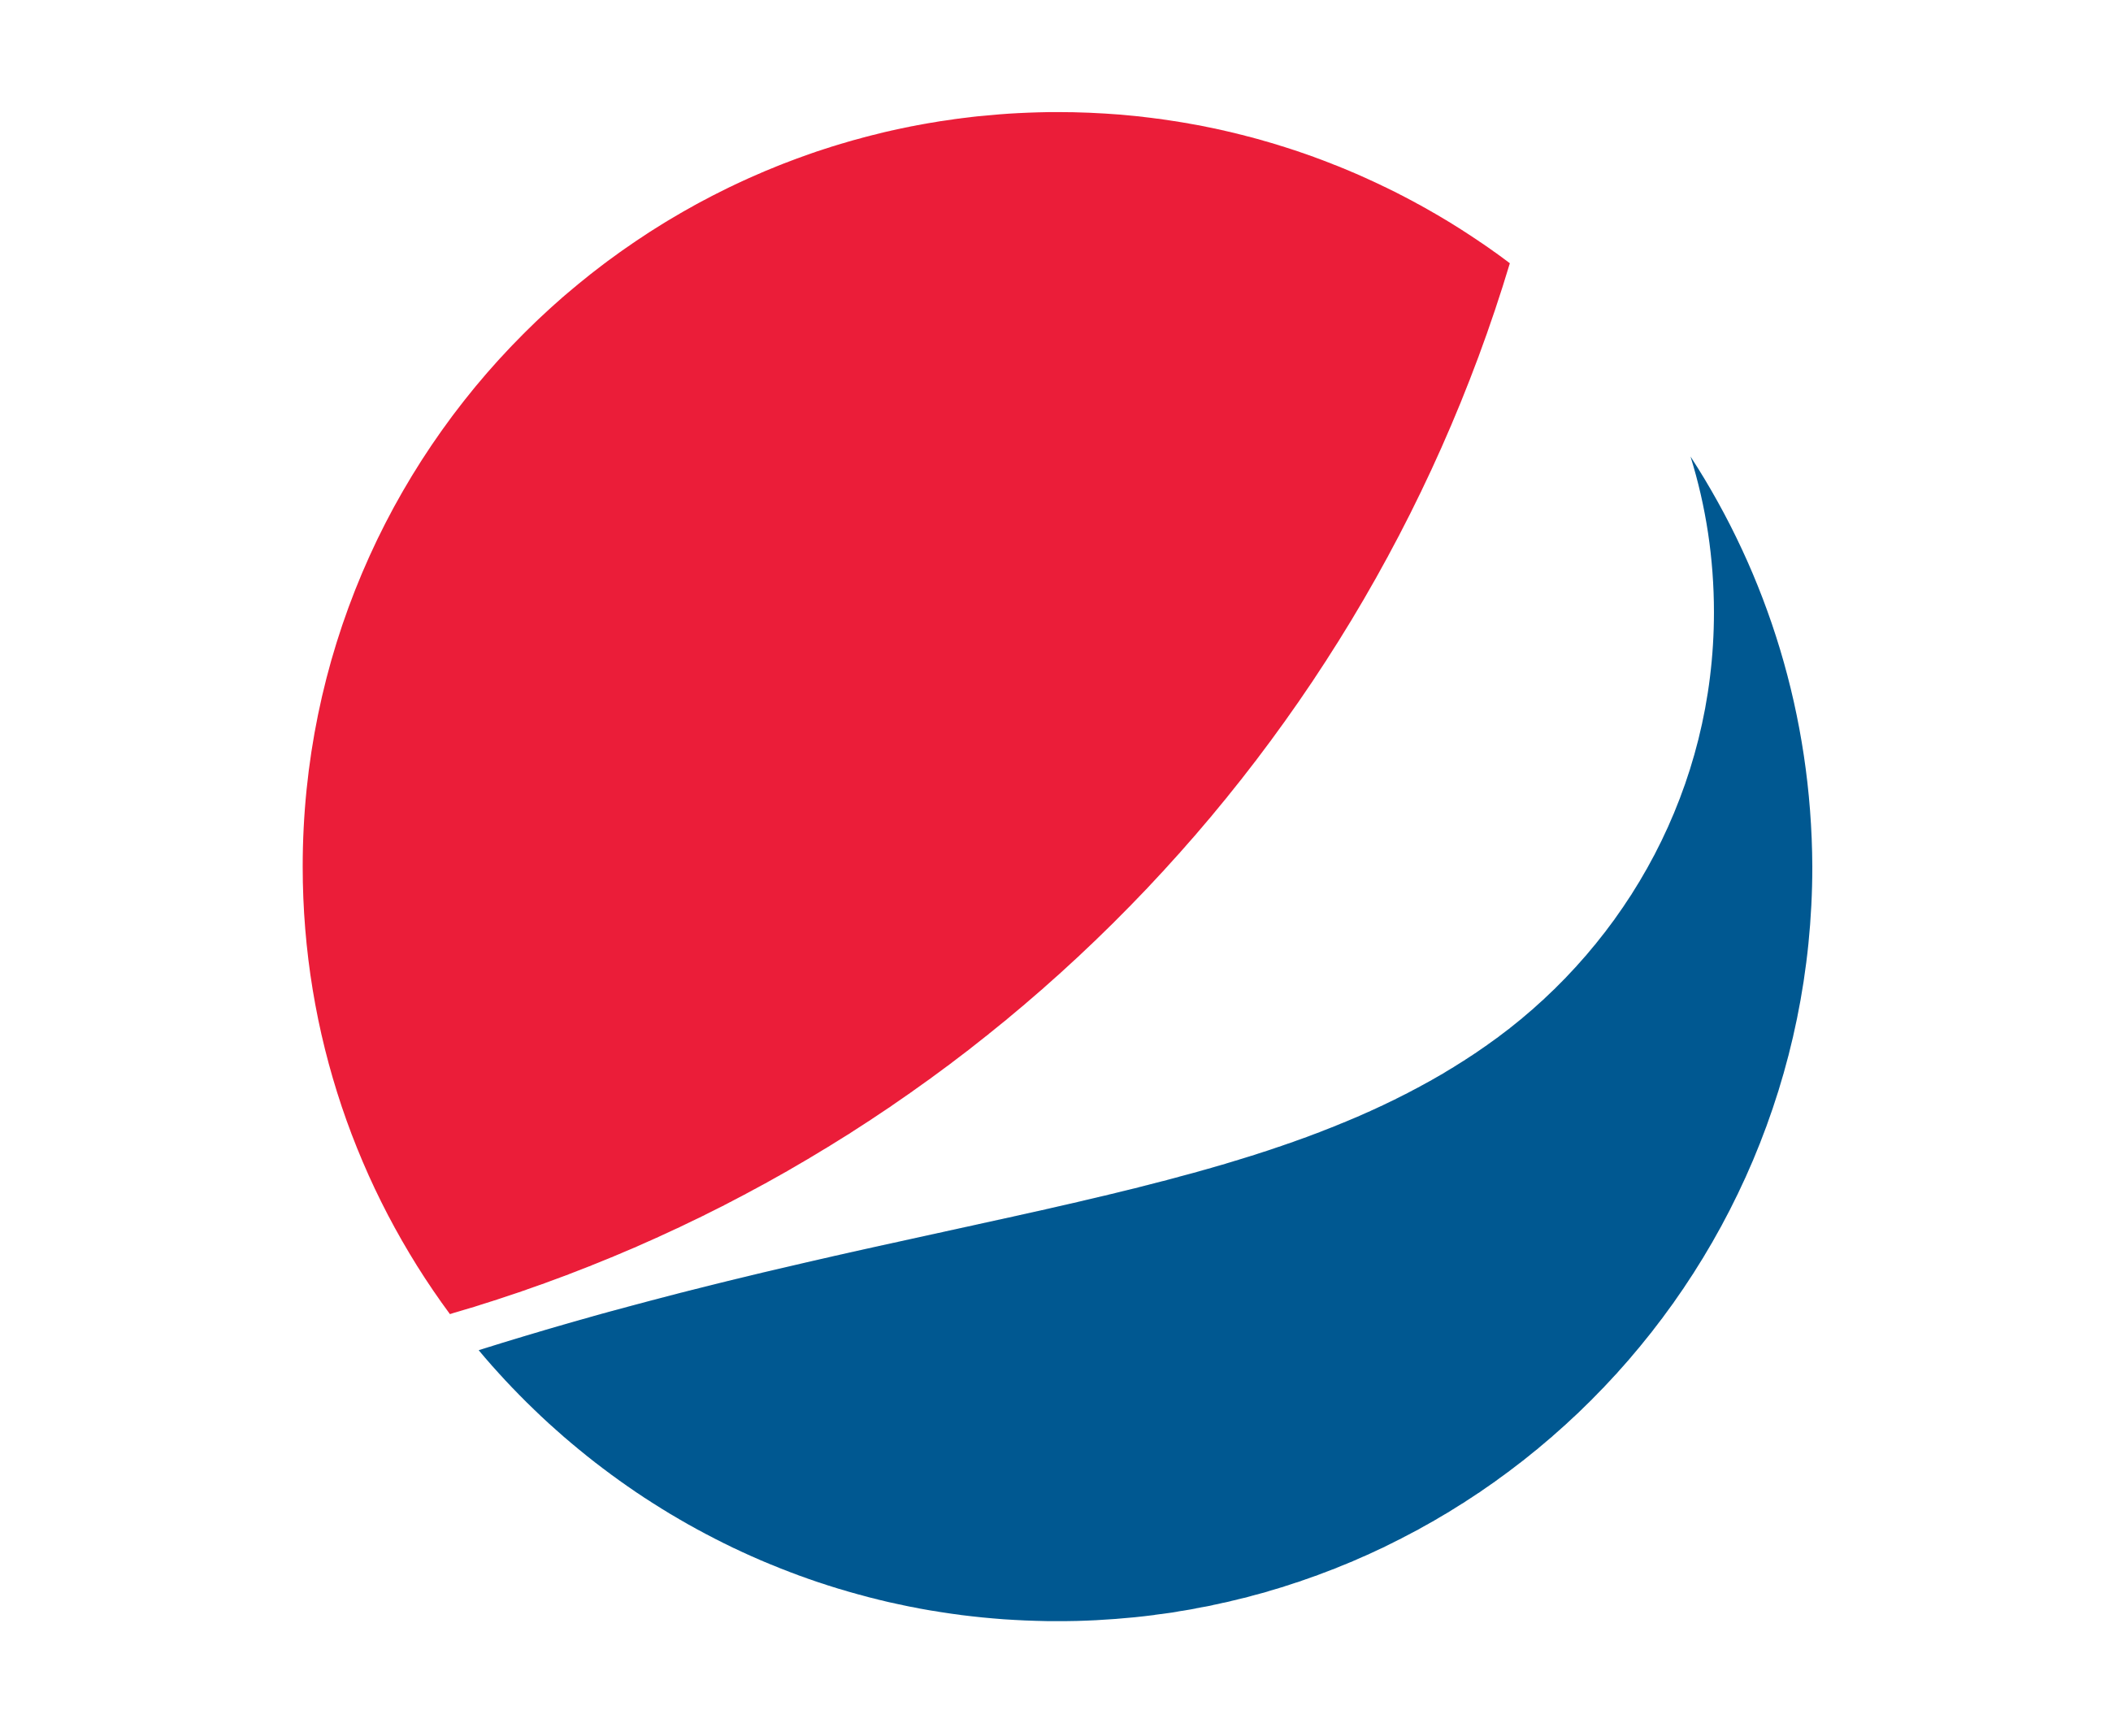 Pepsico